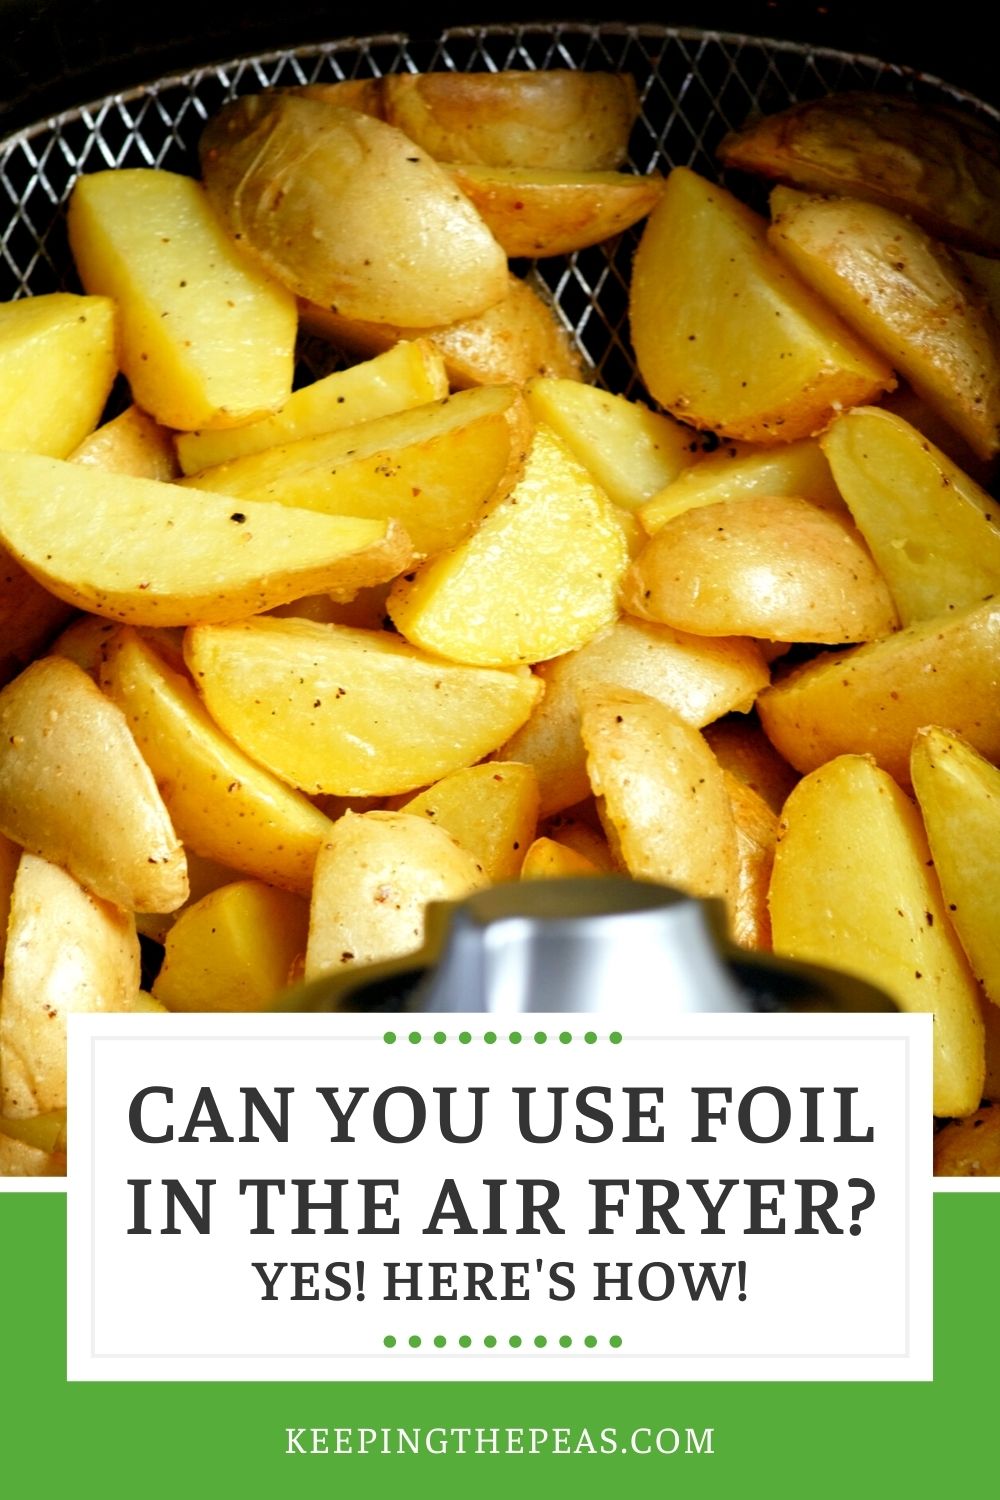 potato wedges in air fryer basket